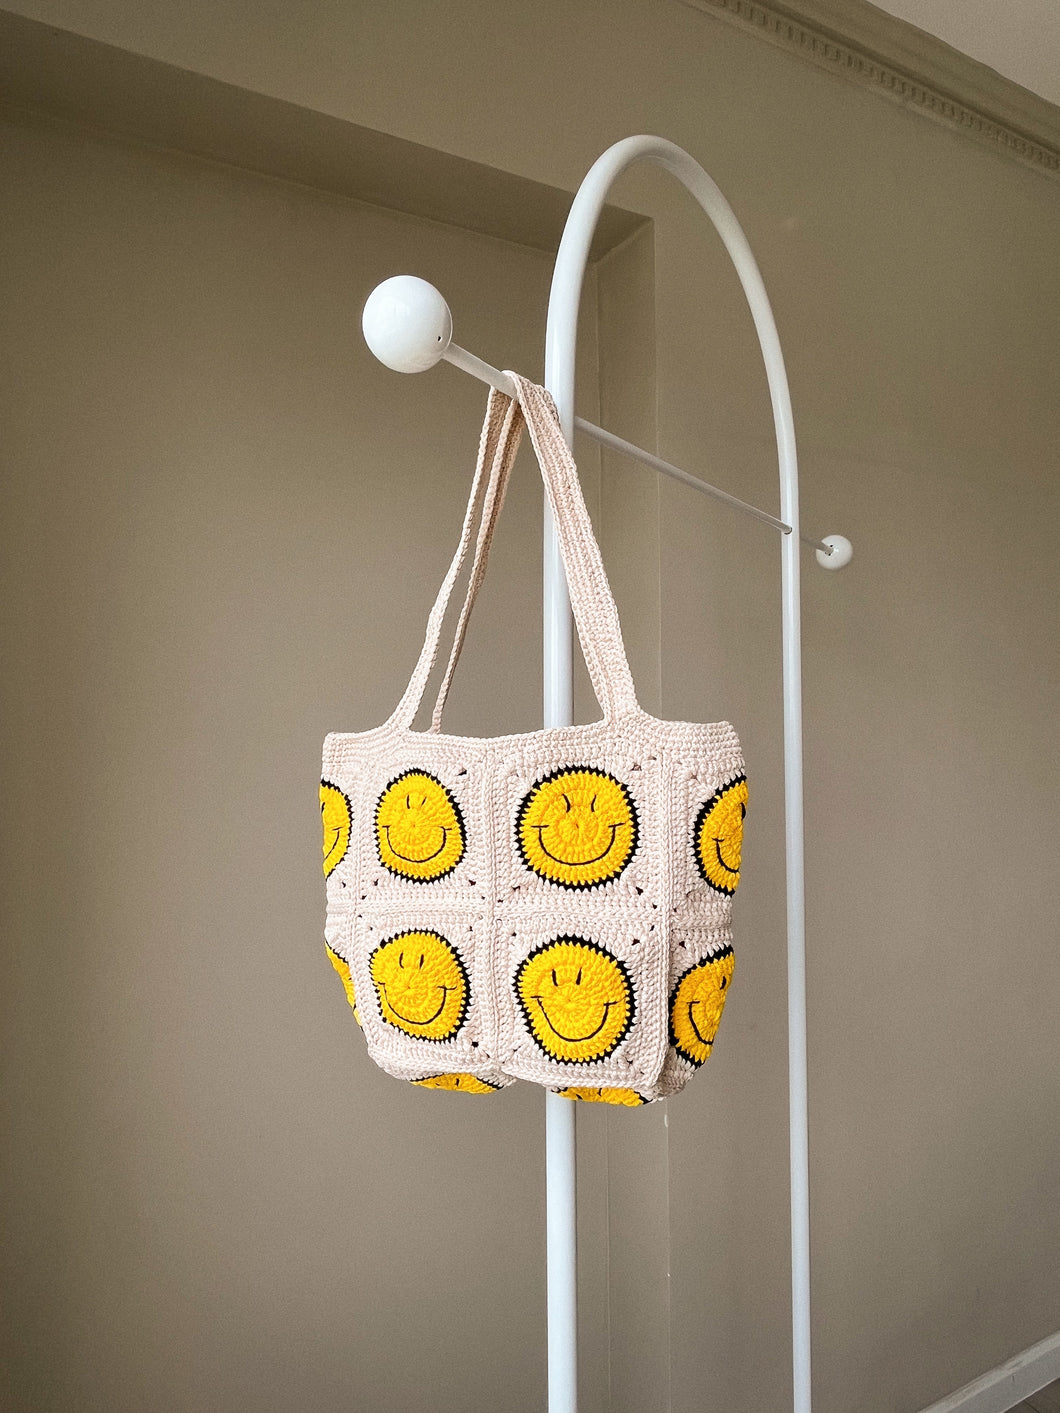 Churi Smiley Face Crochet Bag